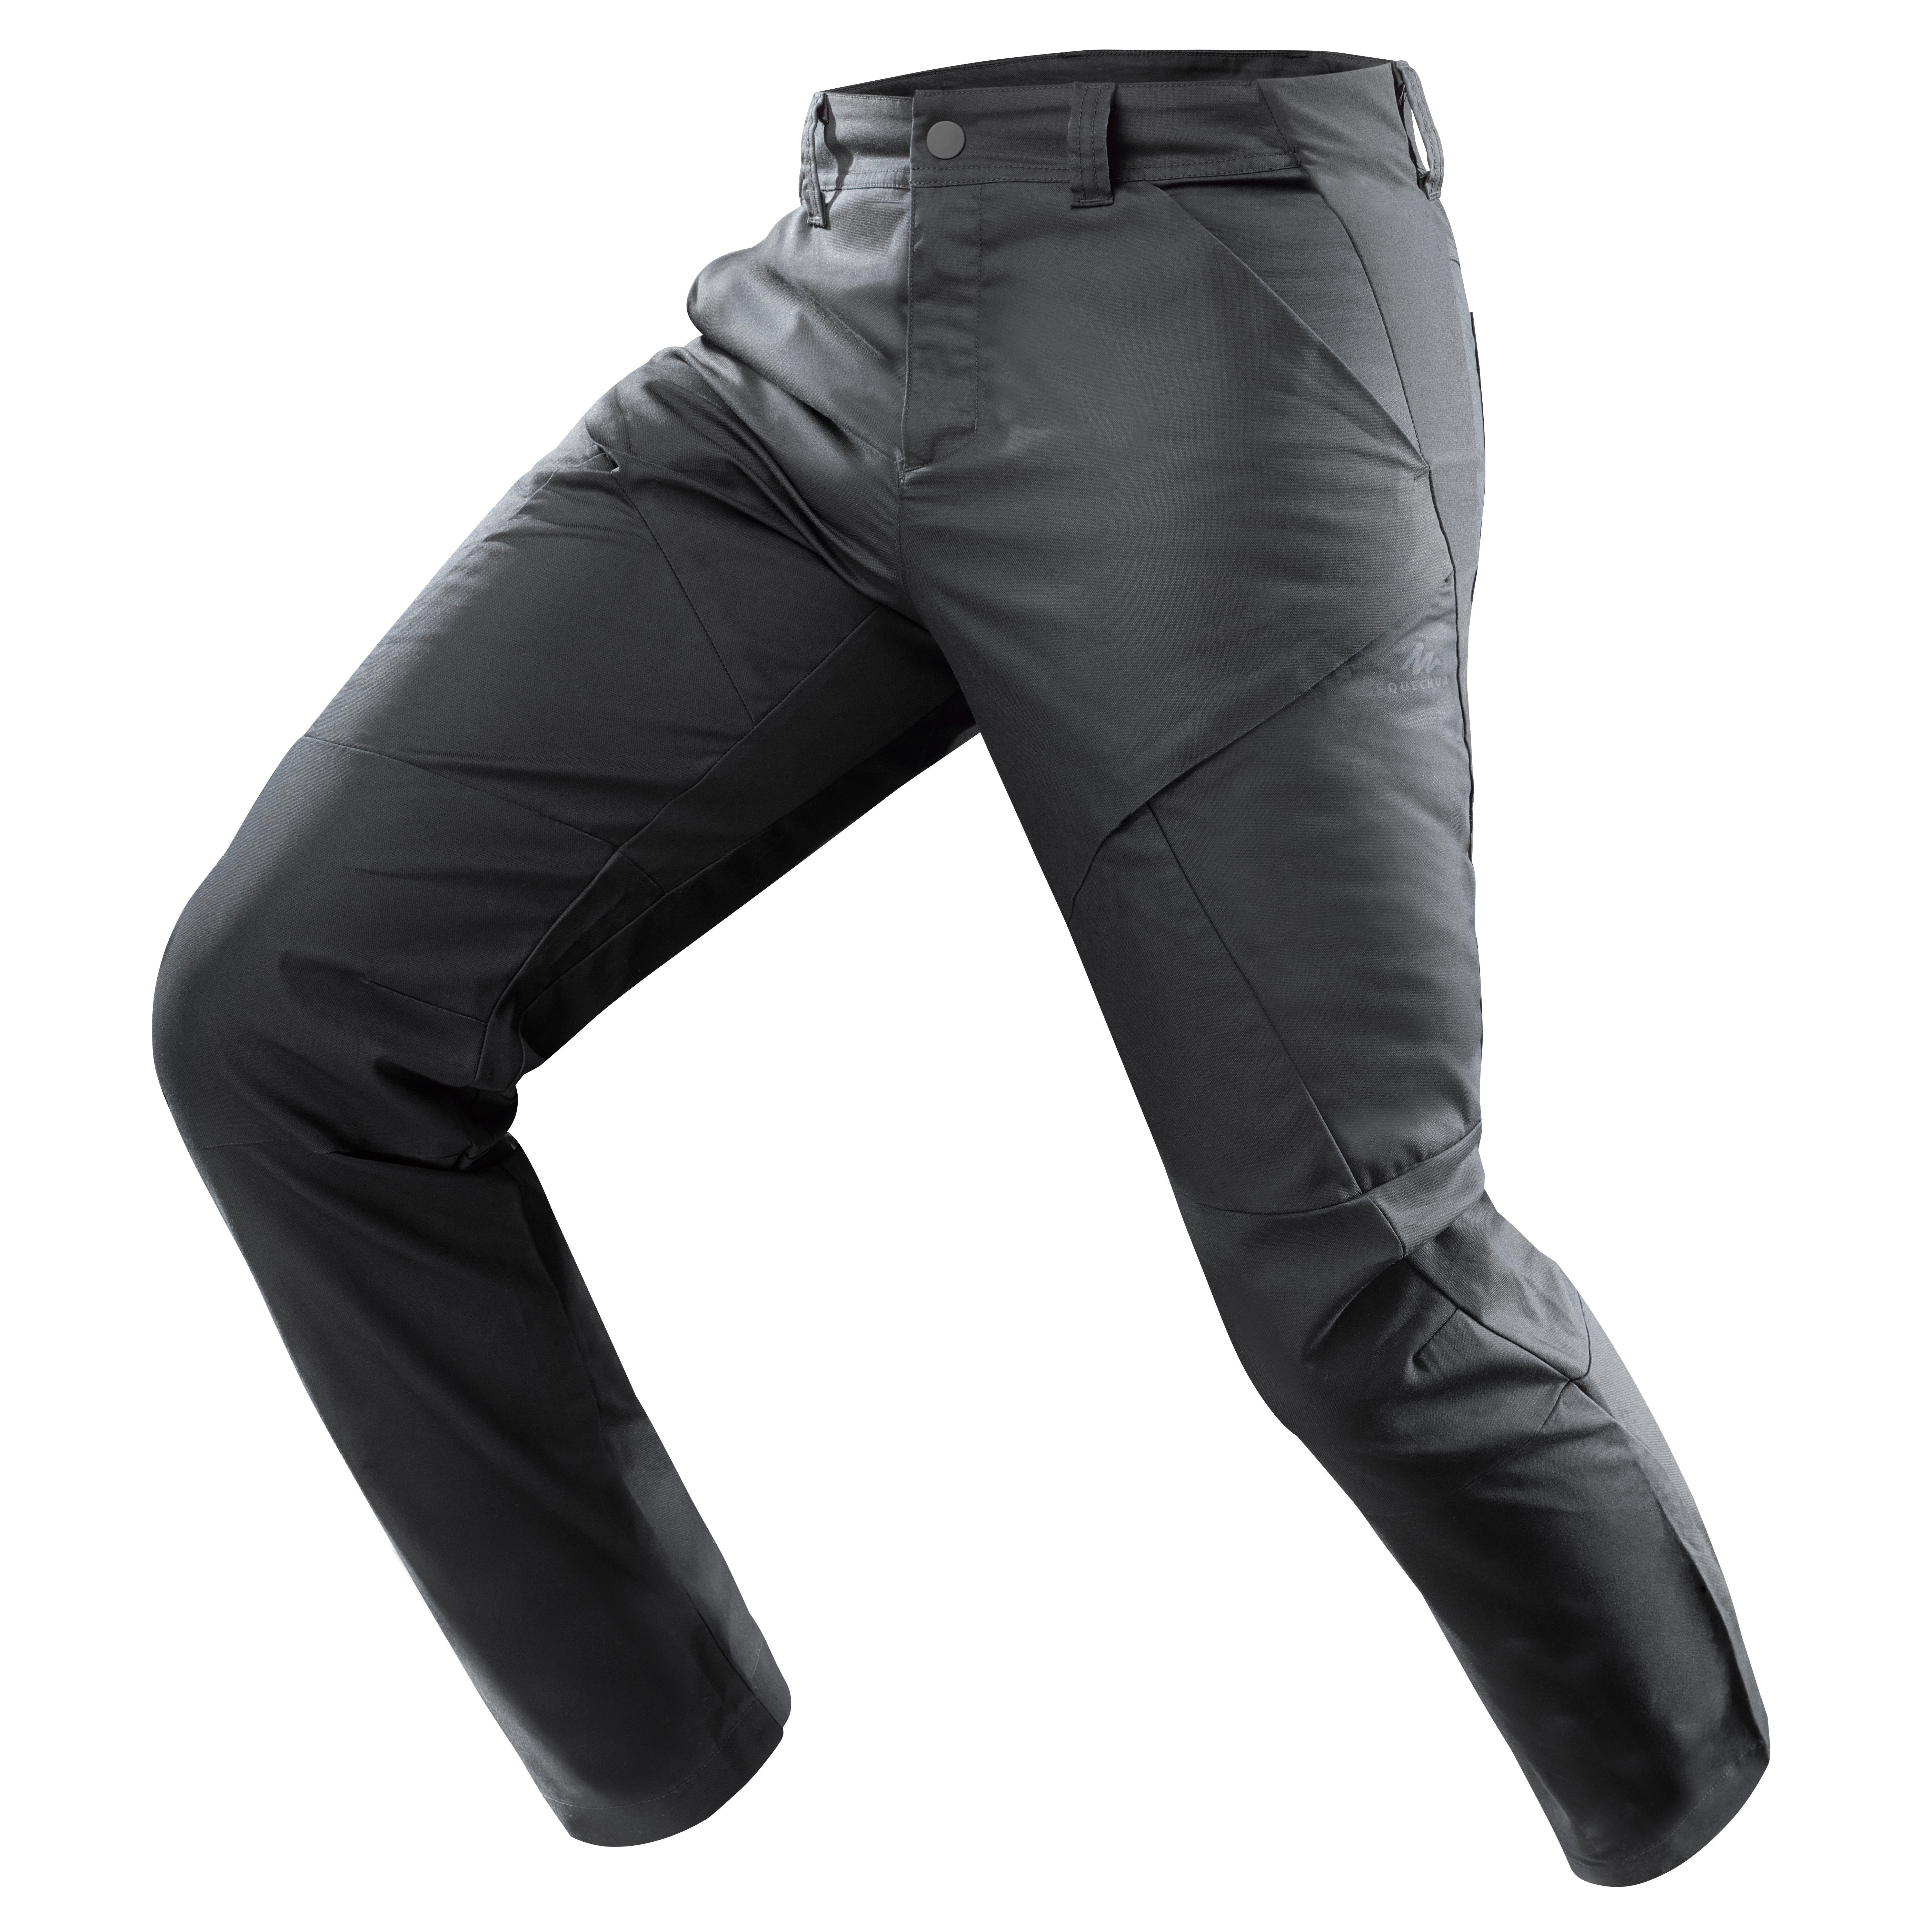 decathlon nh500 trousers